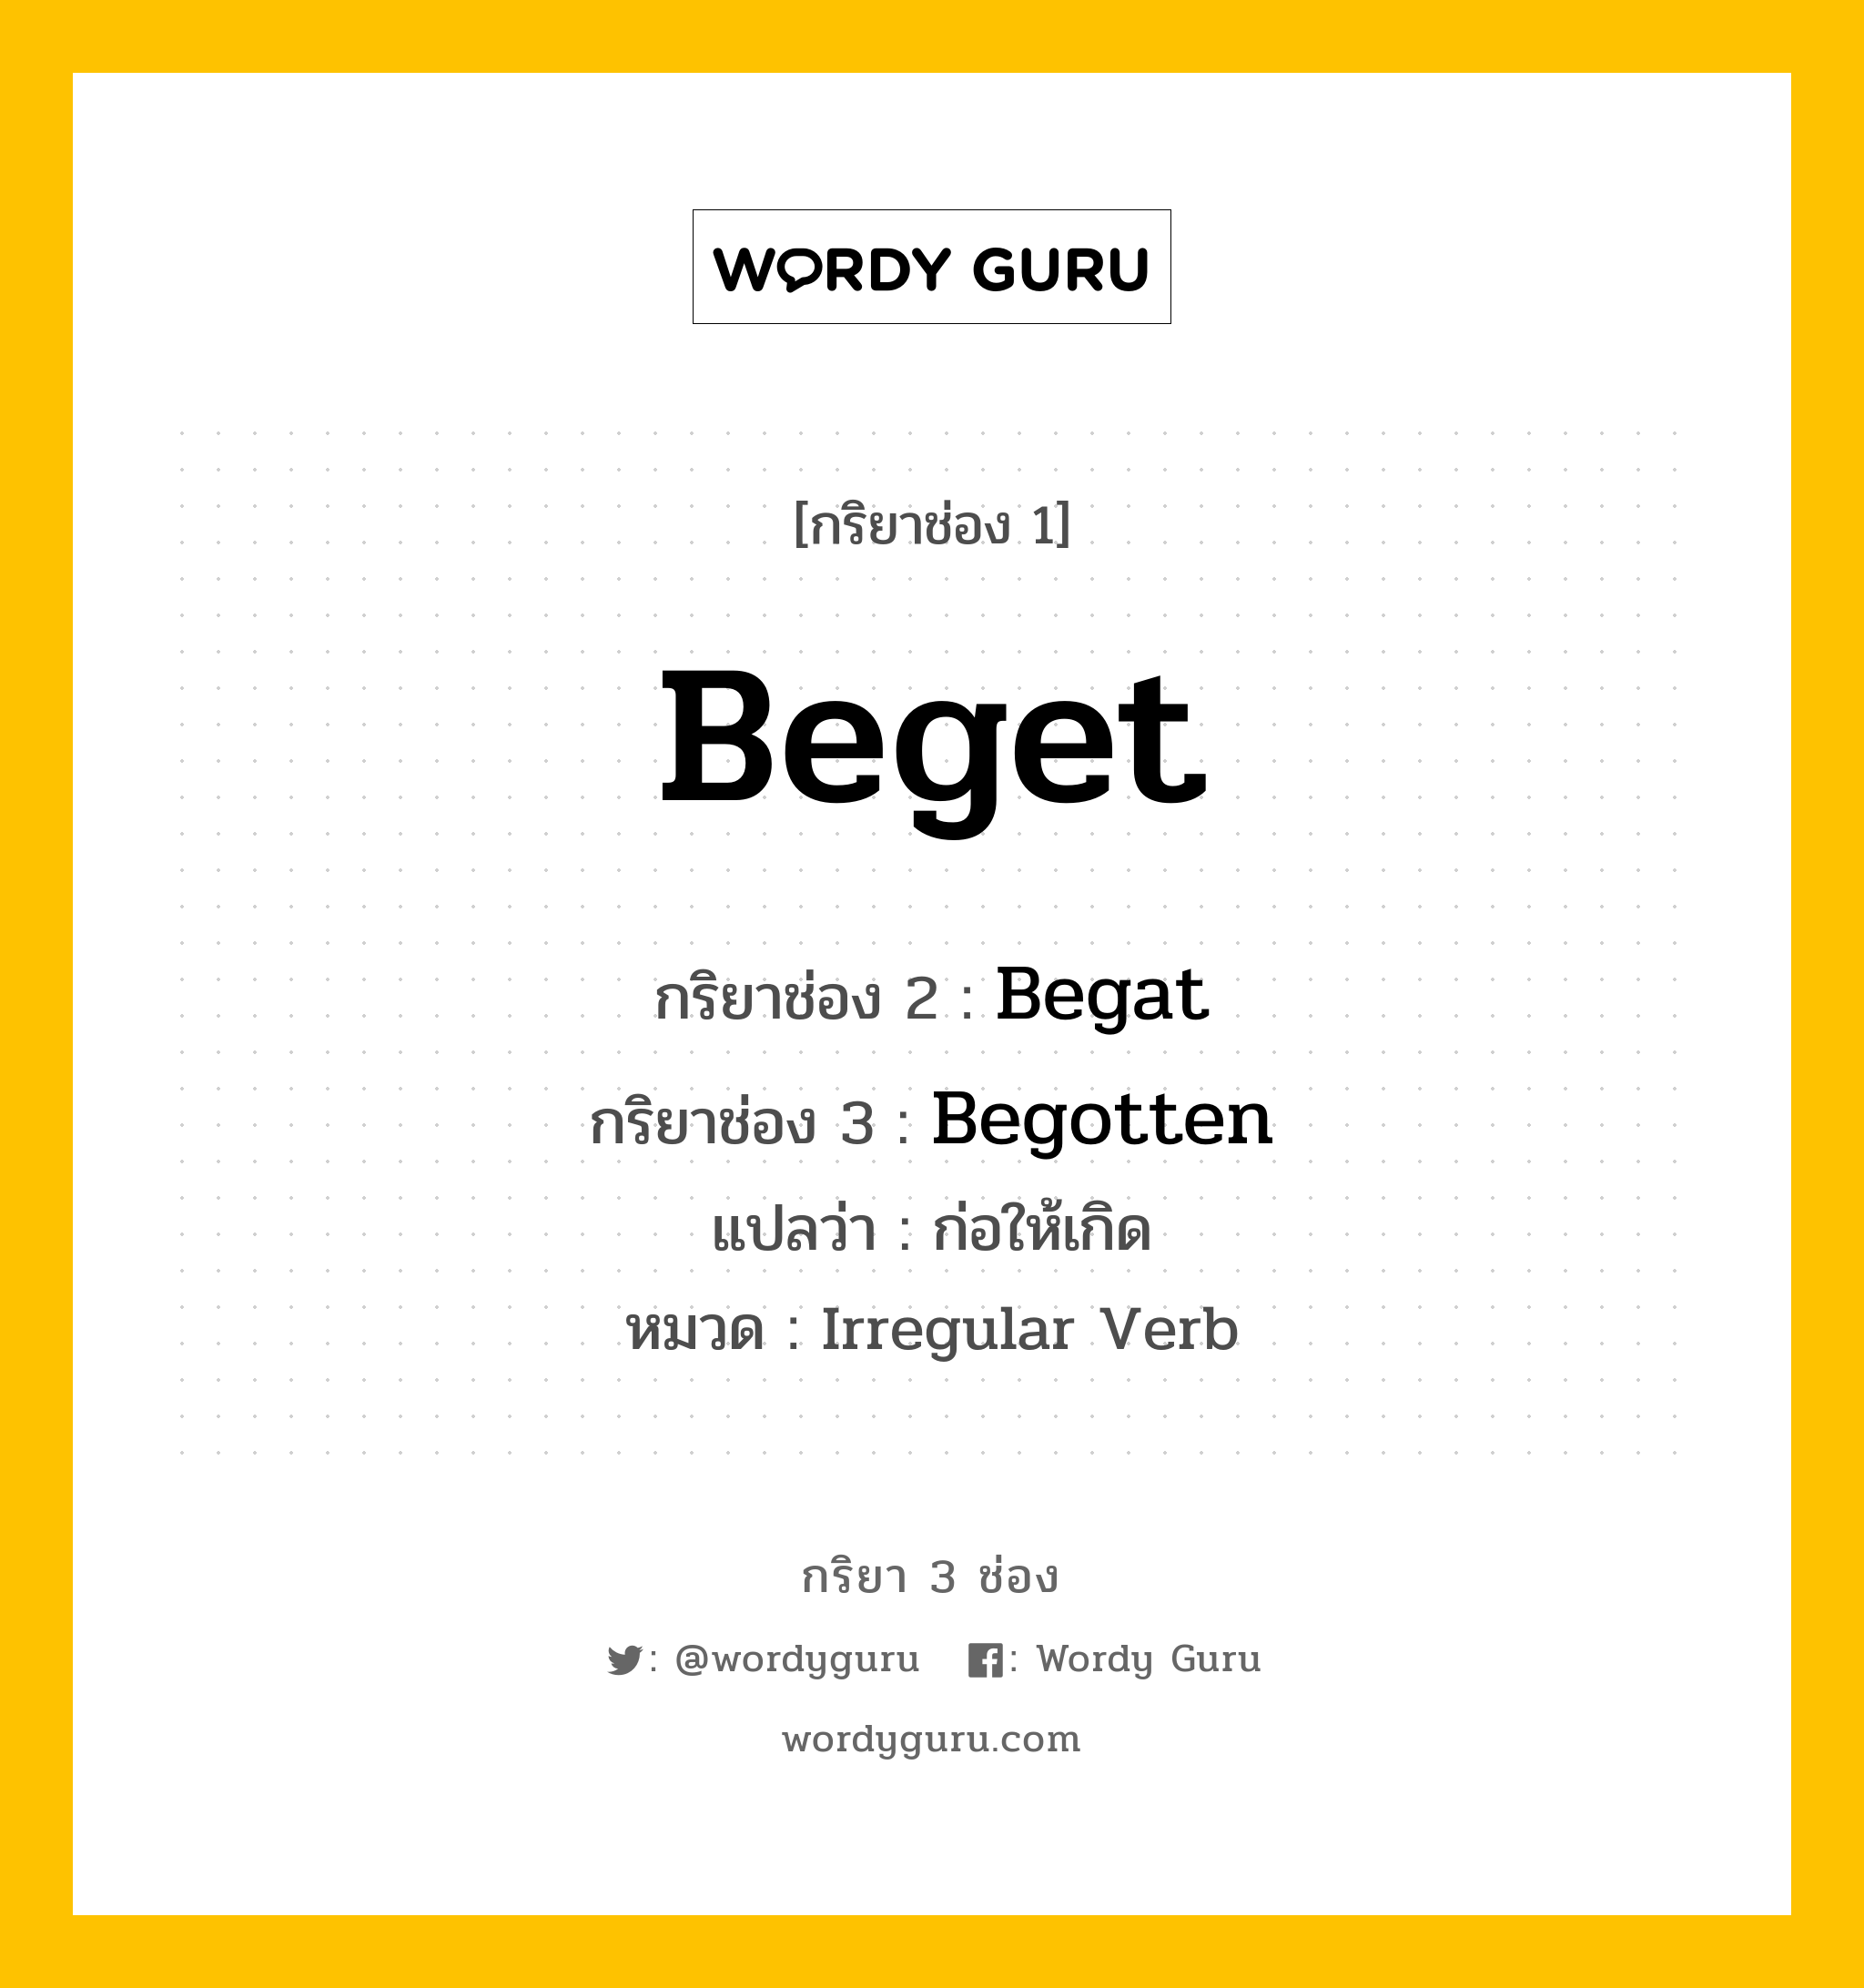 Beget มีกริยา 3 ช่องอะไรบ้าง? คำศัพท์ในกลุ่มประเภท Irregular Verb, กริยาช่อง 1 Beget กริยาช่อง 2 Begat กริยาช่อง 3 Begotten แปลว่า ก่อให้เกิด หมวด Irregular Verb มีหลายแบบ y หมวด Irregular Verb